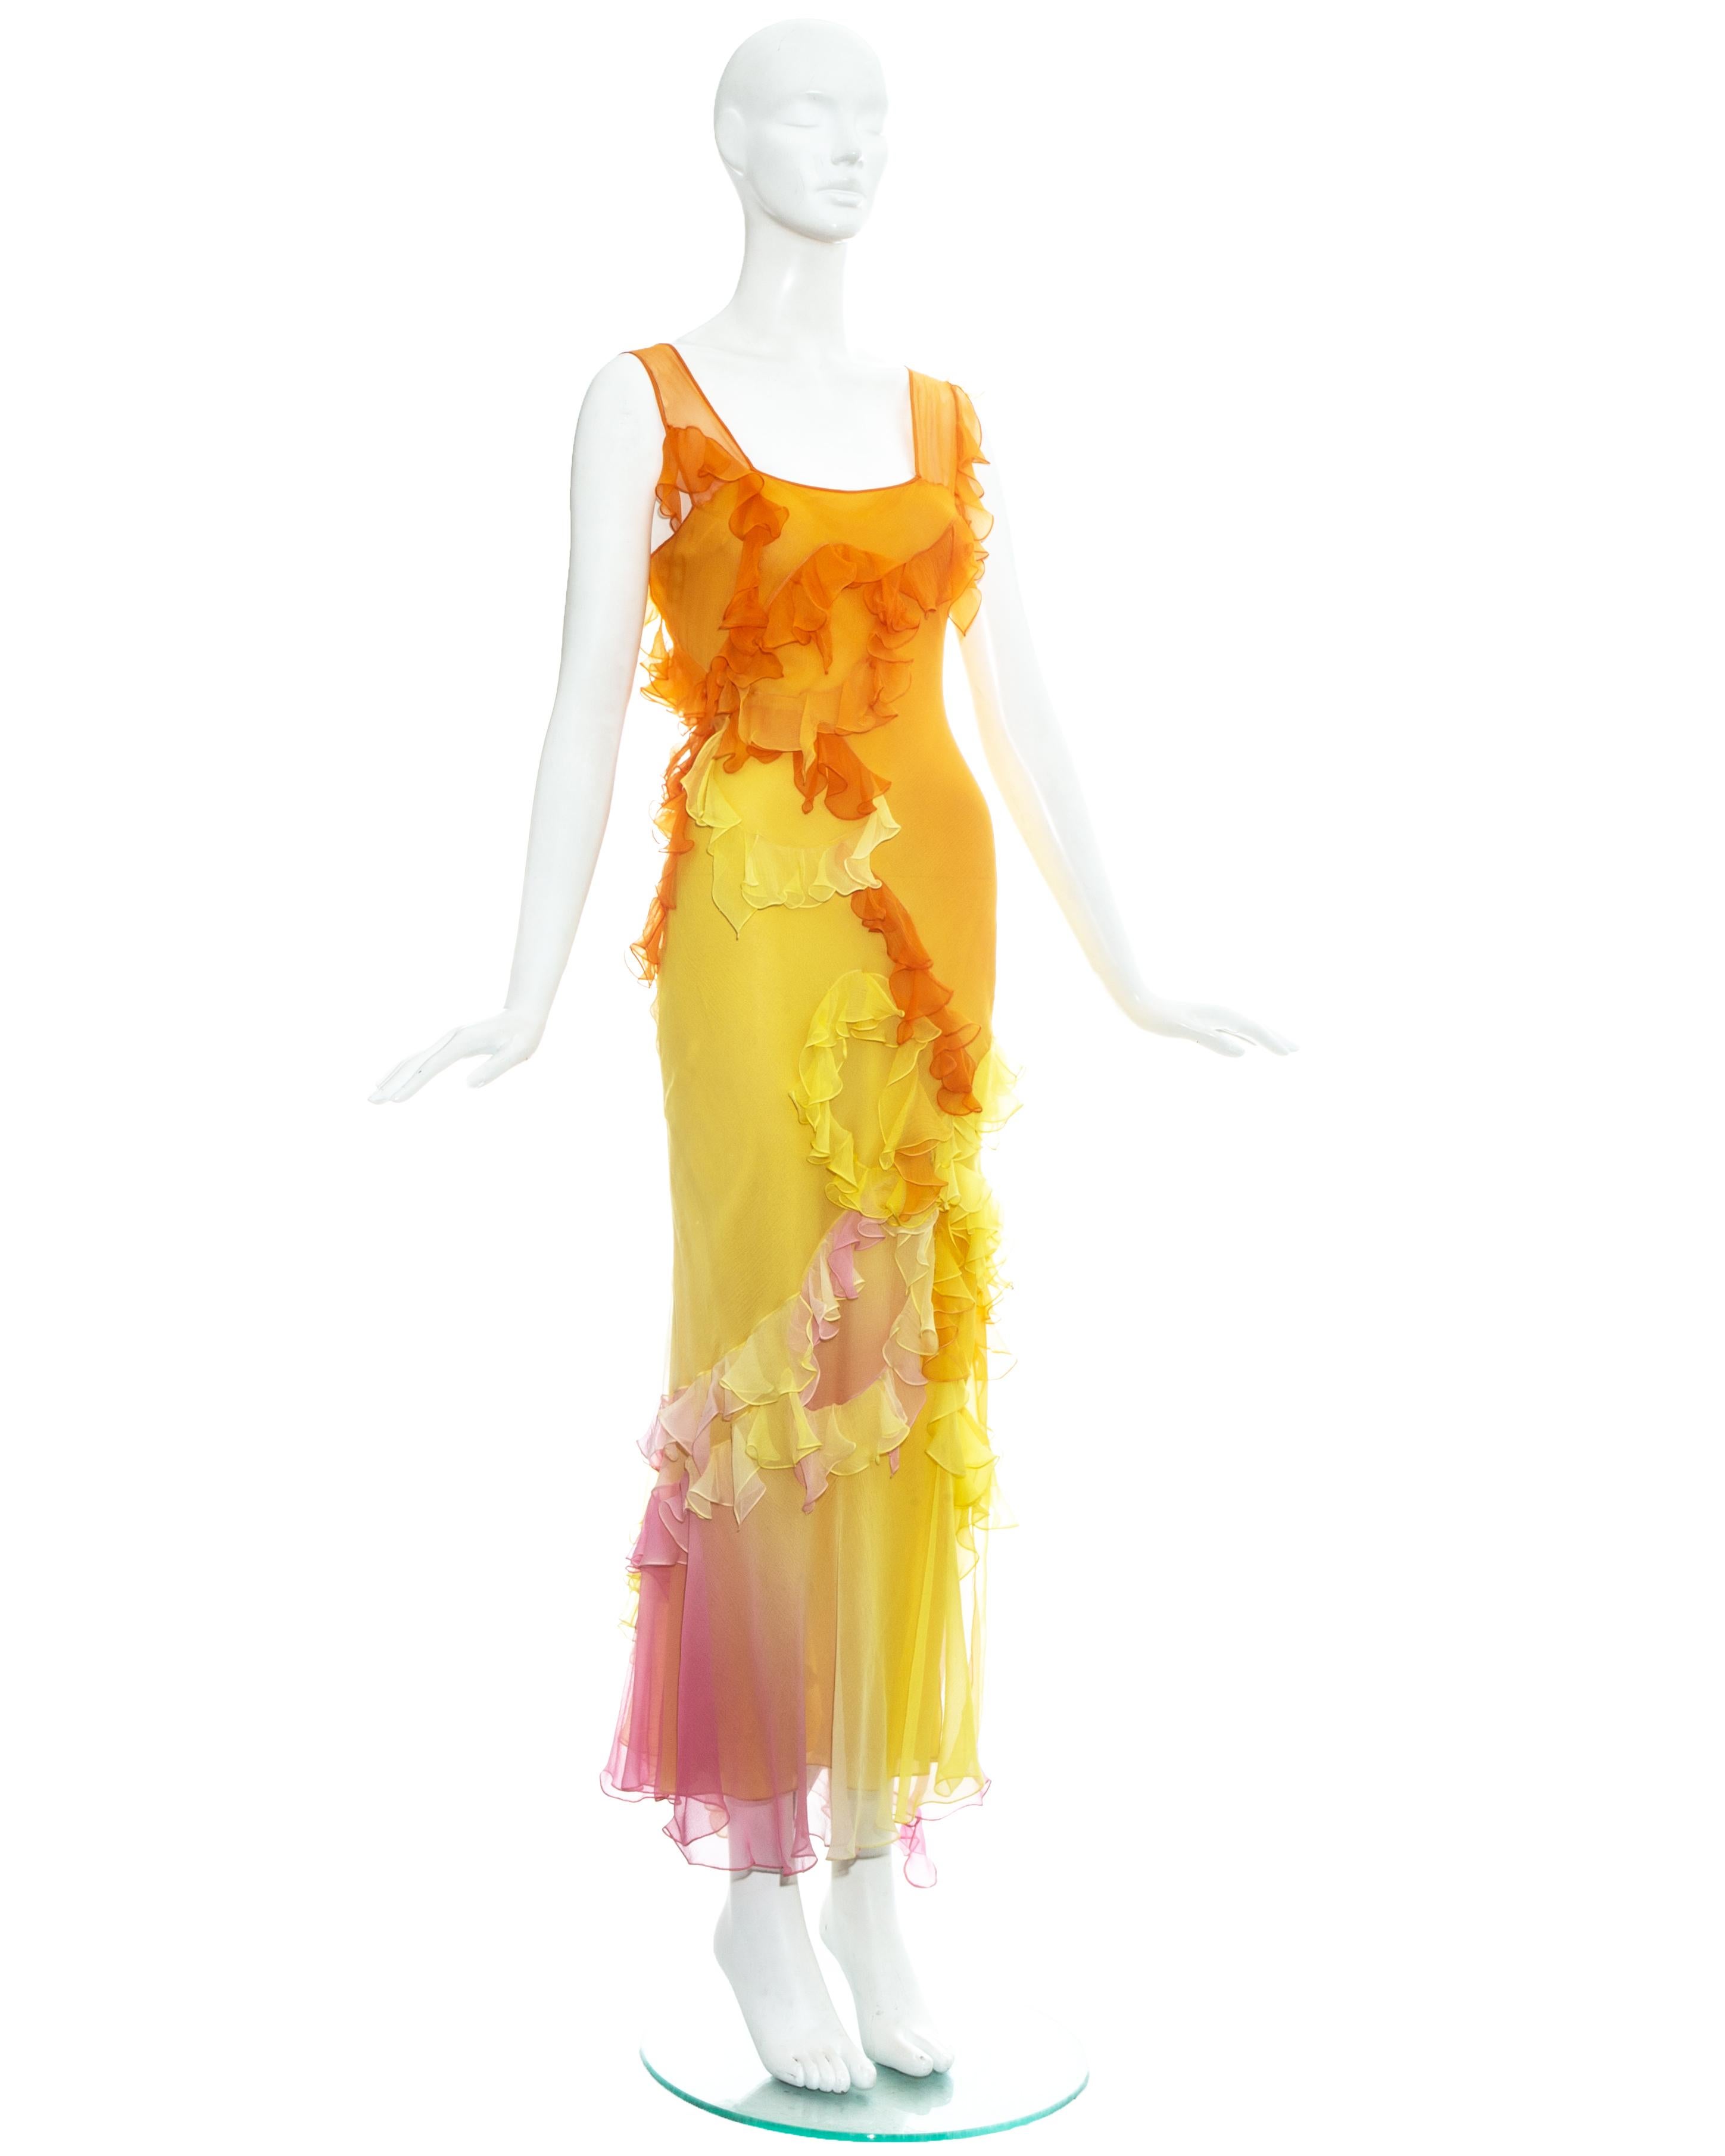 John Galliano silk chiffon ruffled evening dress in highlighter shades of orange, yellow and pink. 

Spring-Summer 2005